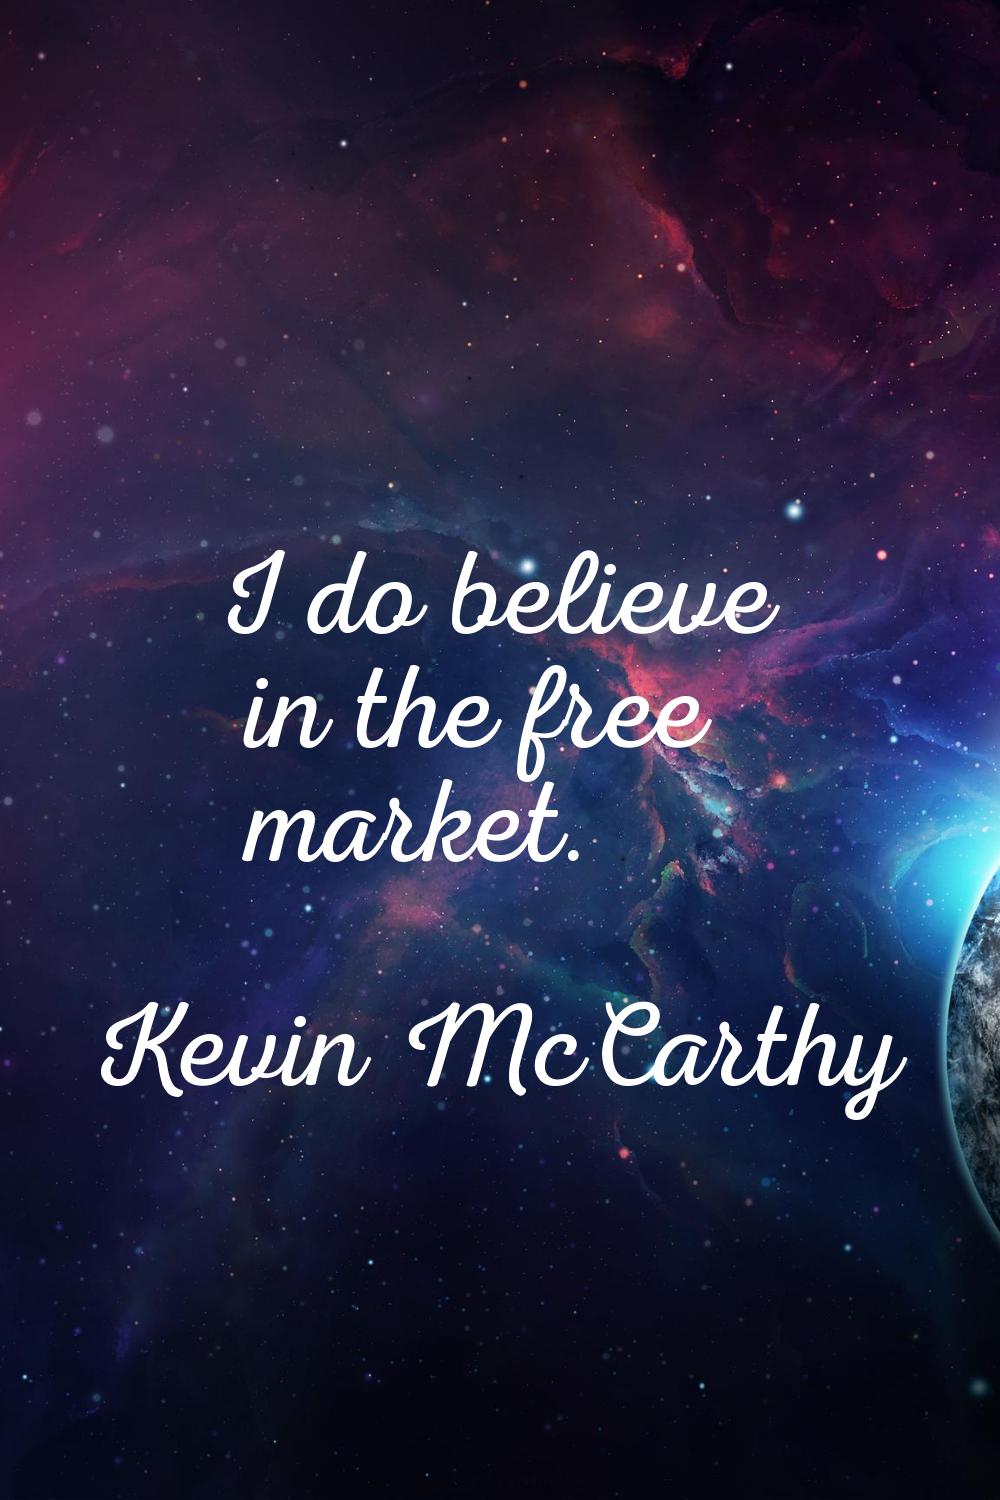 I do believe in the free market.